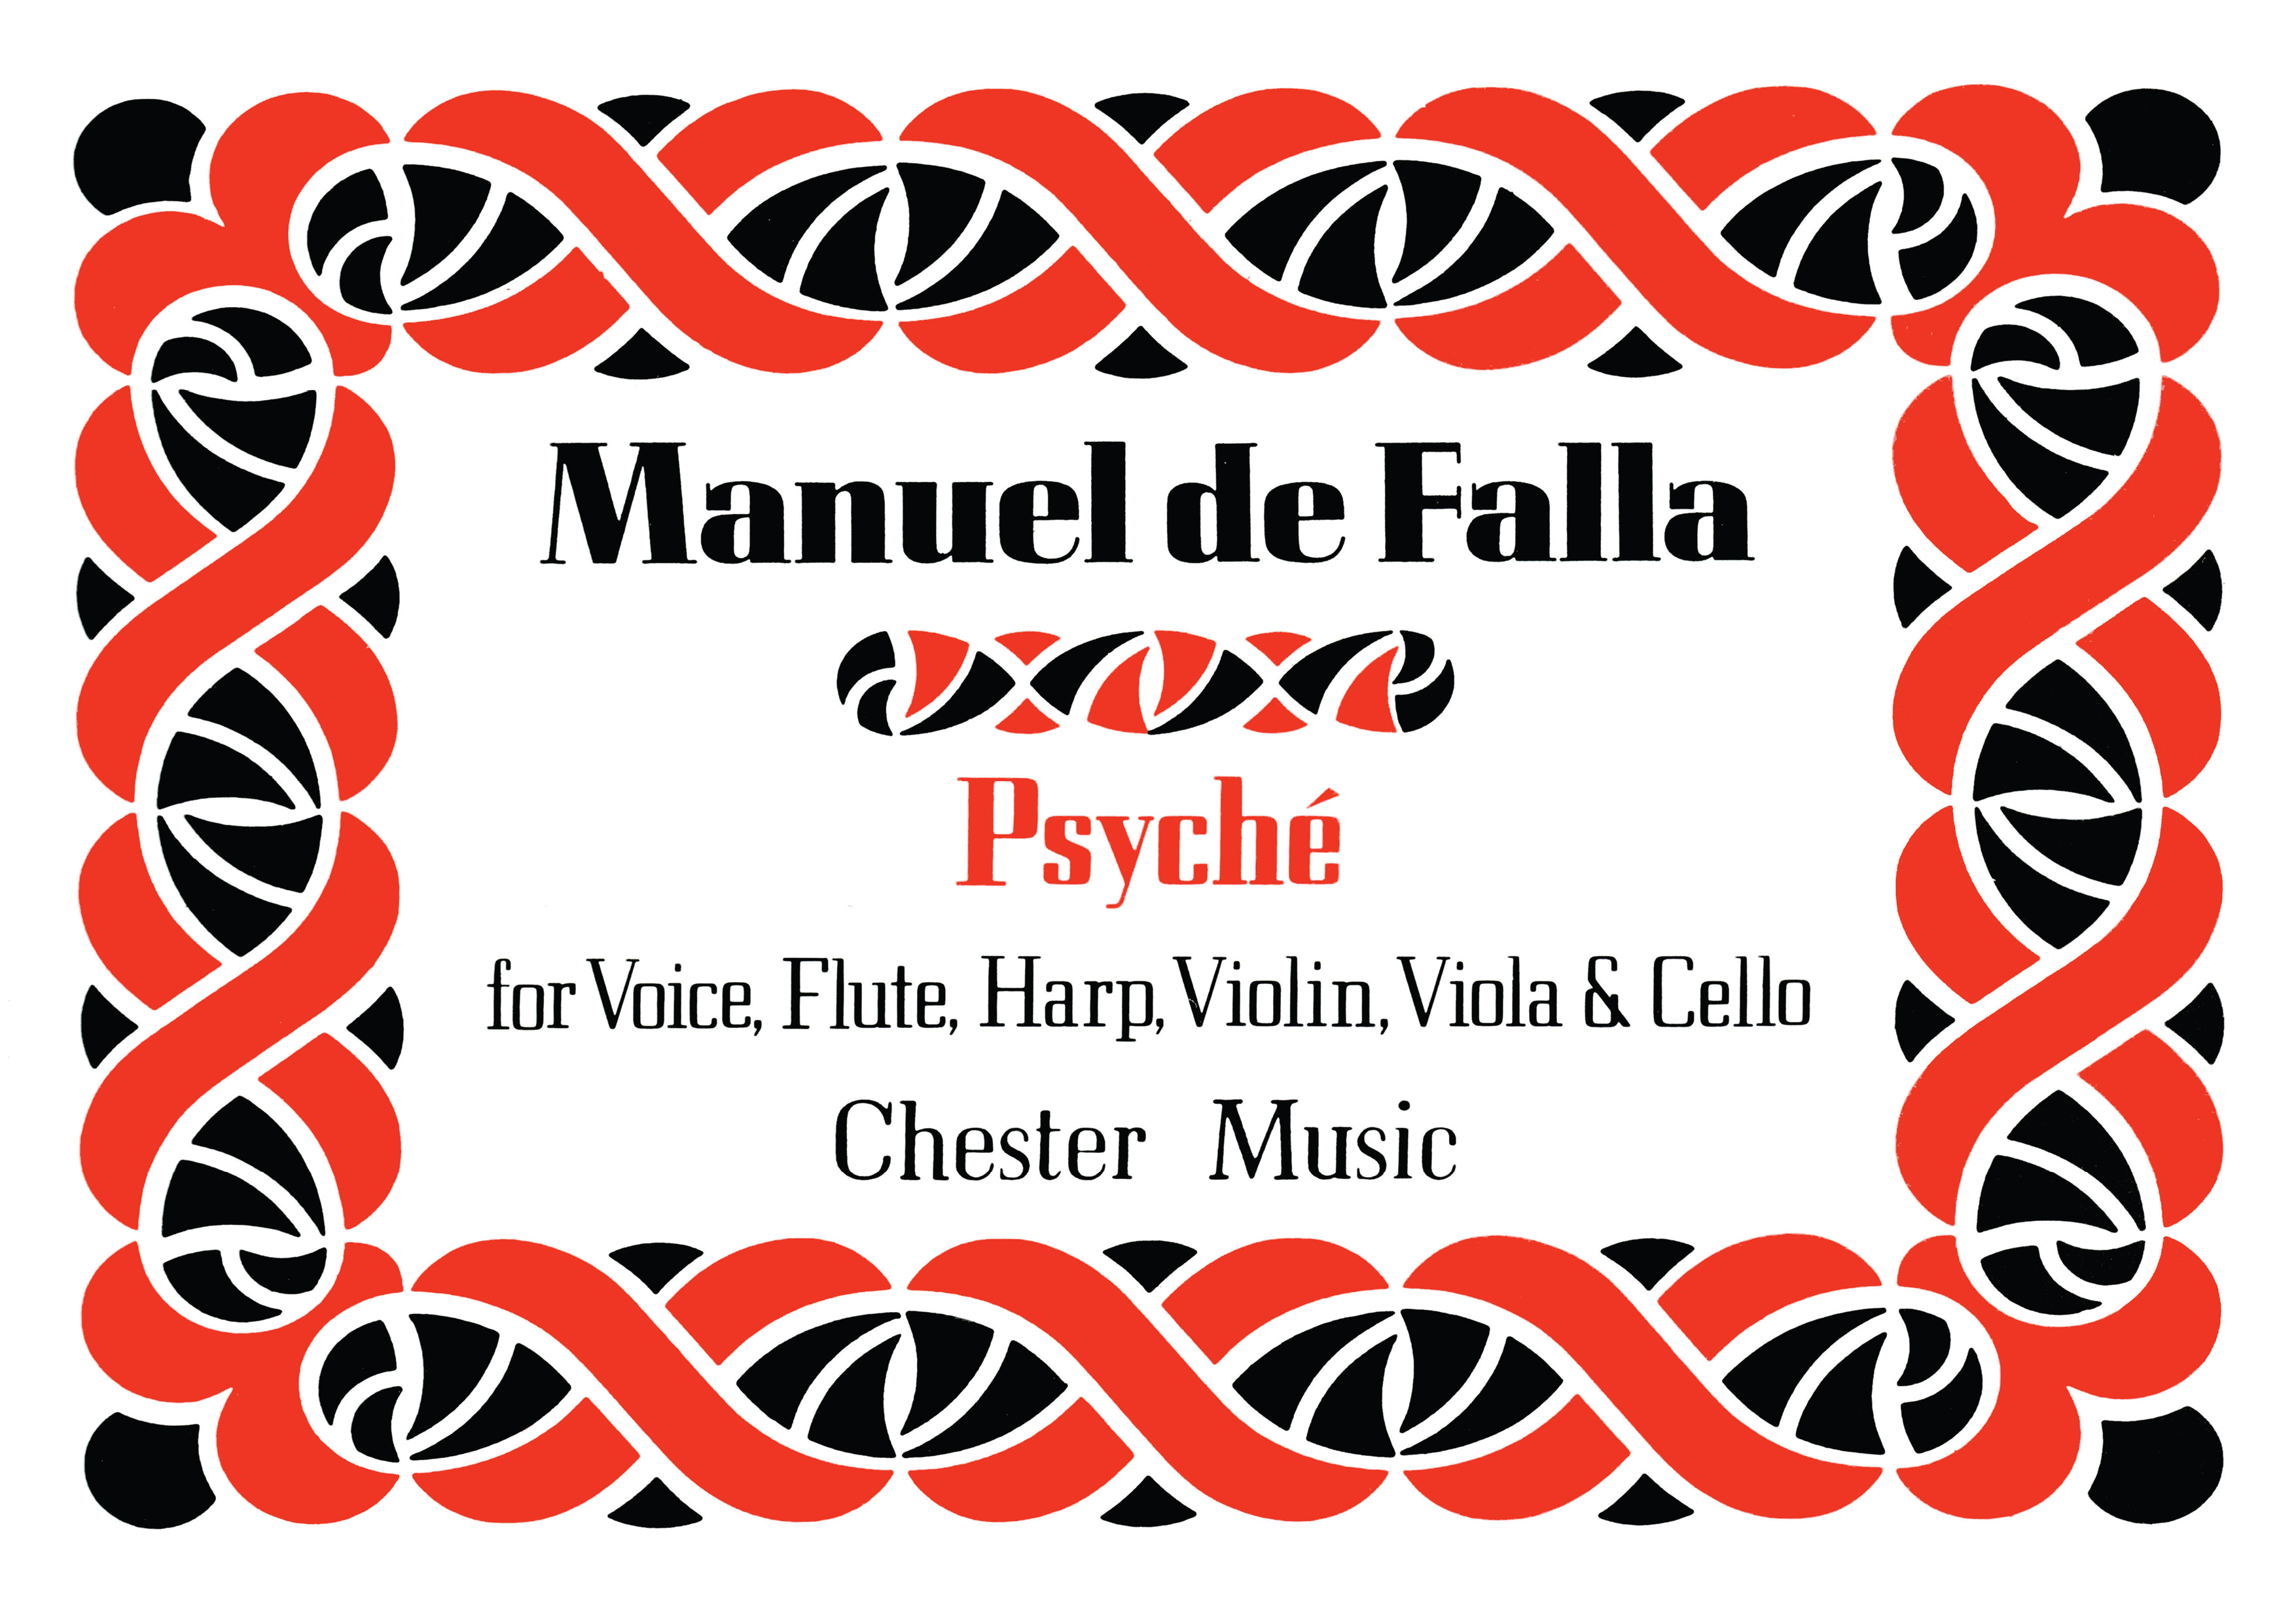 Manuel de Falla: Psyche: Voice: Miniature Score